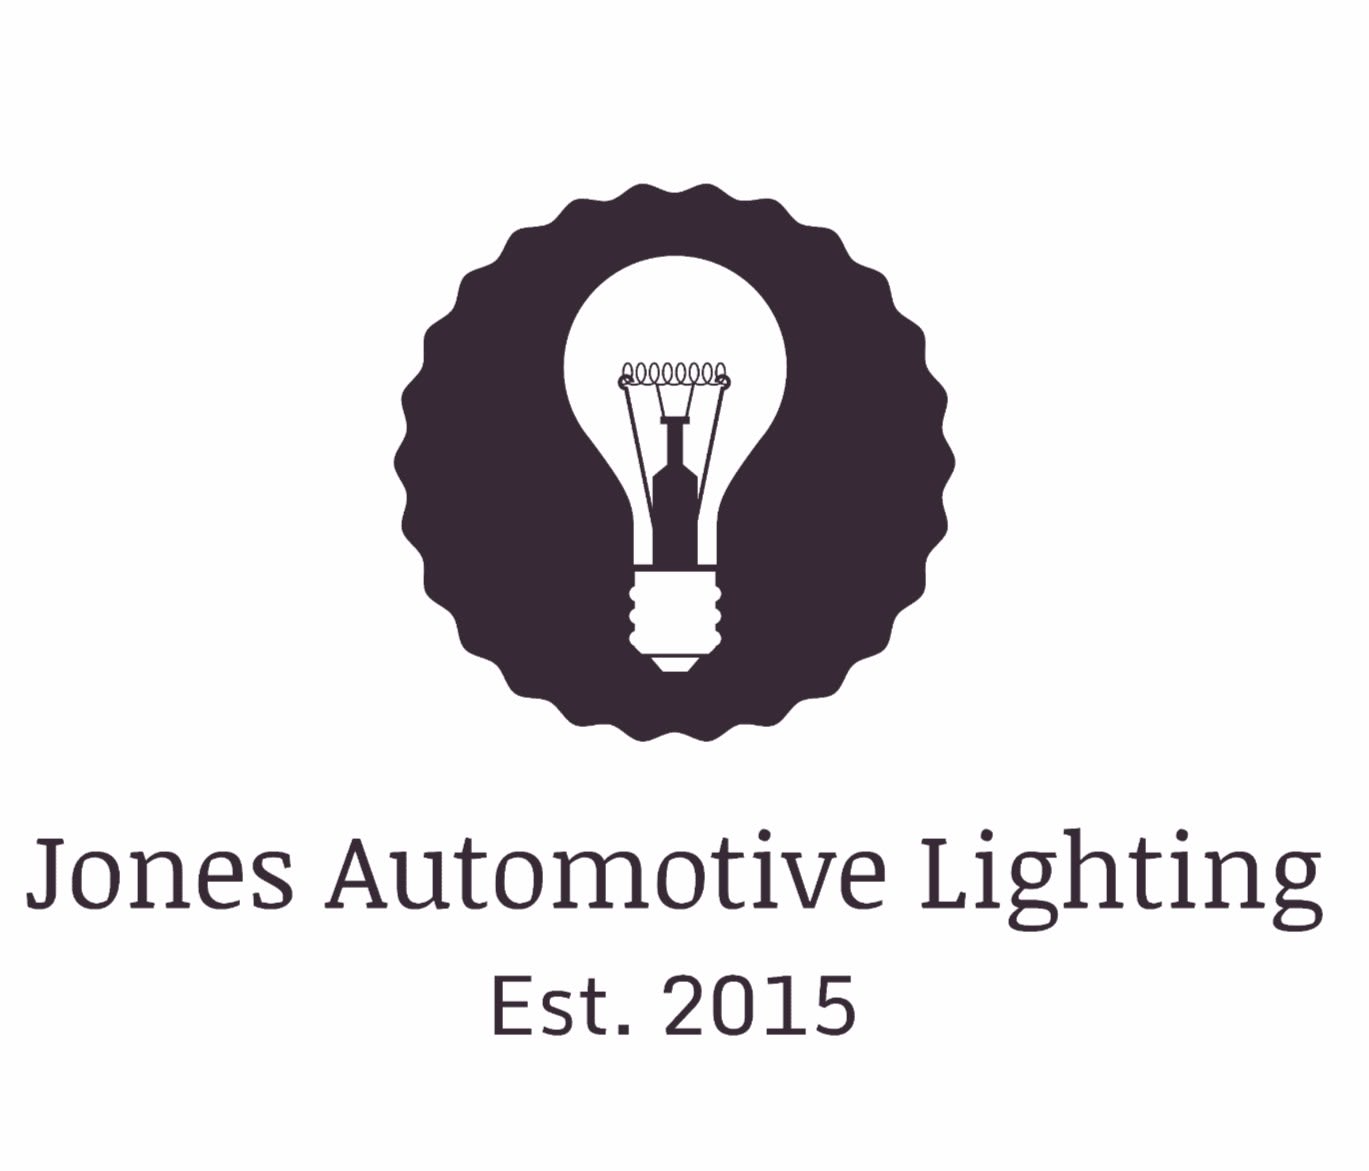 Jones Automotive Lighting